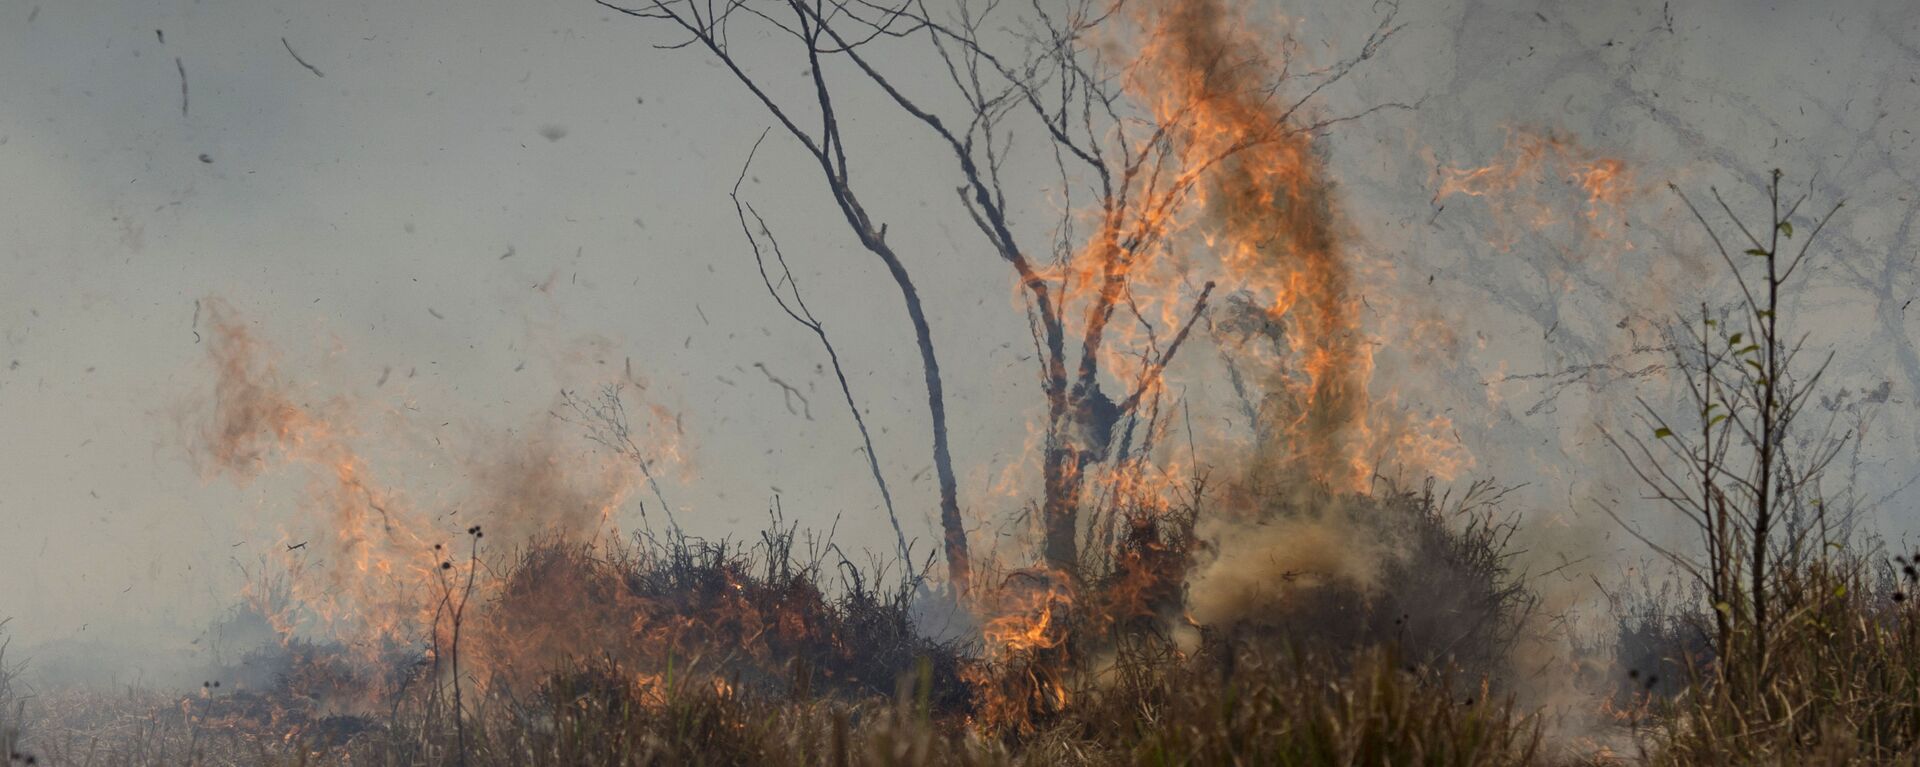 Incendio forestal en la Amazonía brasileña - Sputnik Mundo, 1920, 01.05.2020